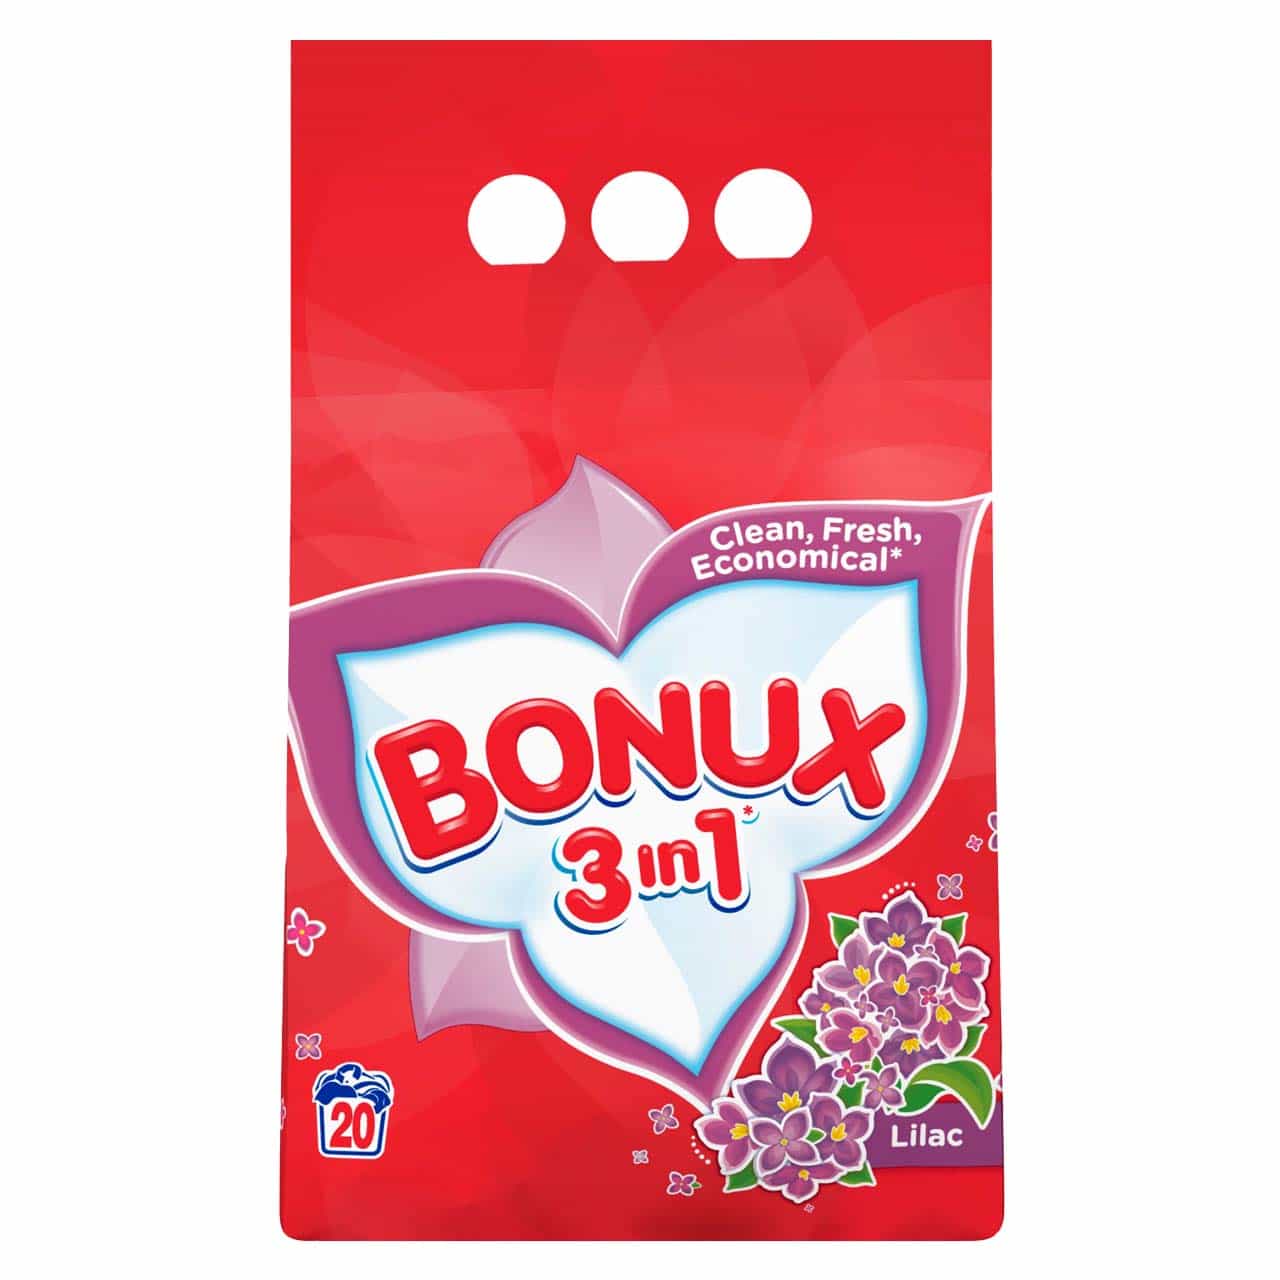 Pandashop md. Bonux порошок. Bonux капсулы для стирки. Bonux 3 in 1 Color. Реклама Bonux.